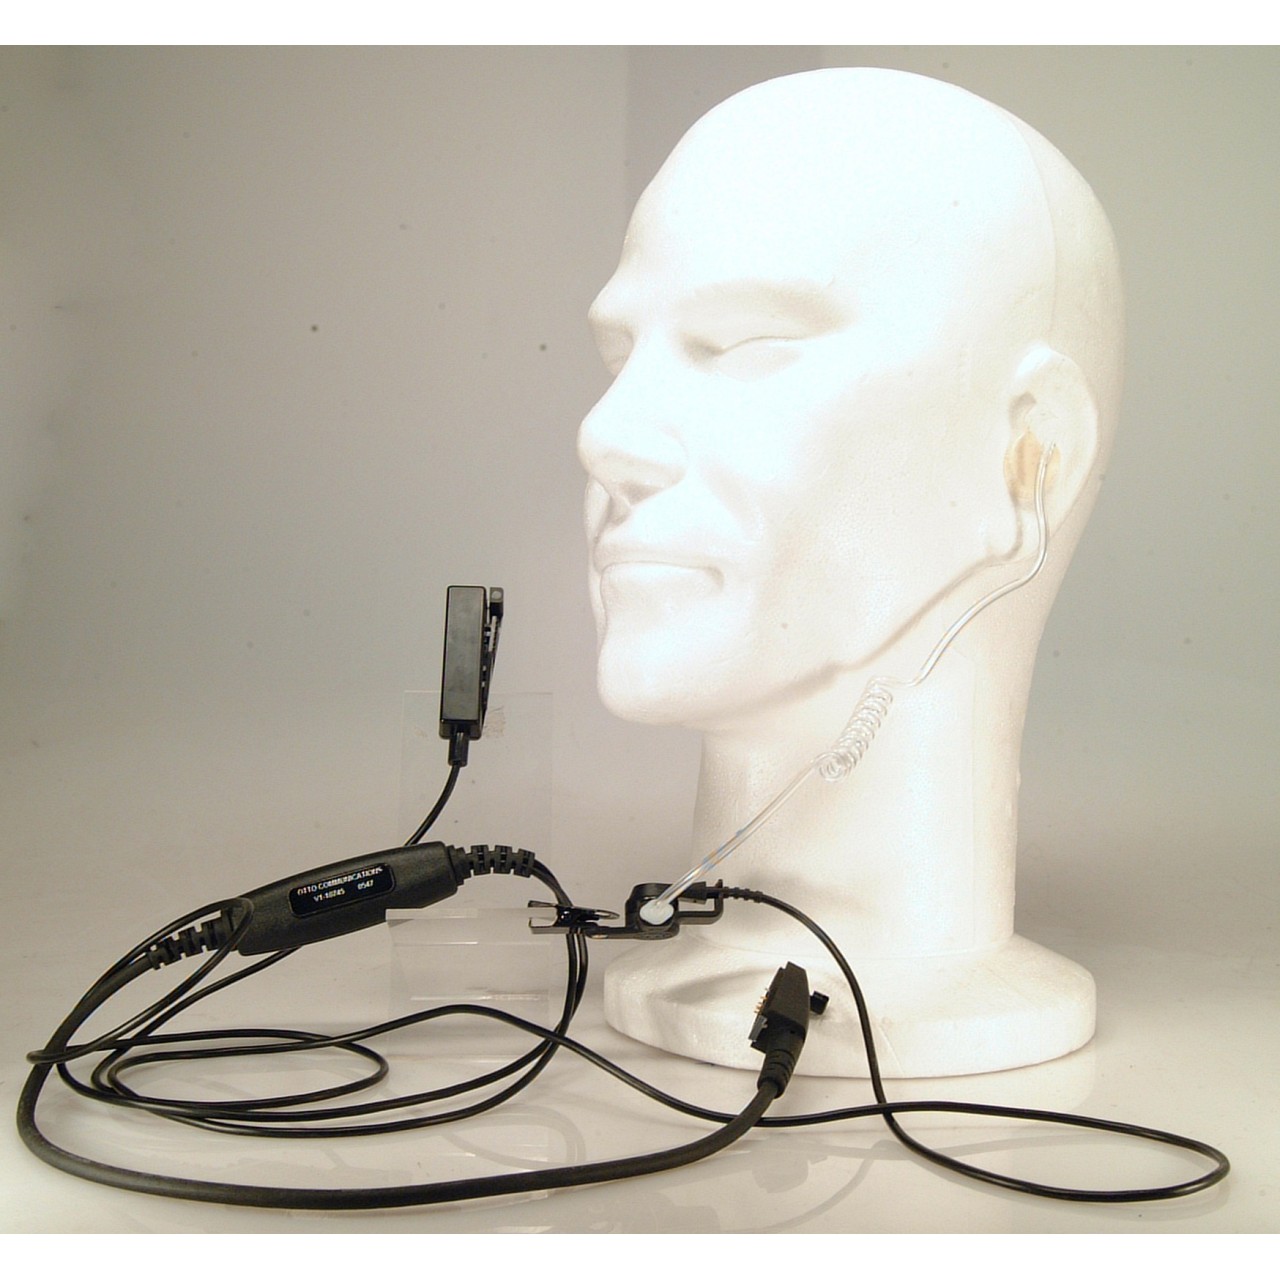 EP-OT2FN51 Headsets and earphones - ICOM